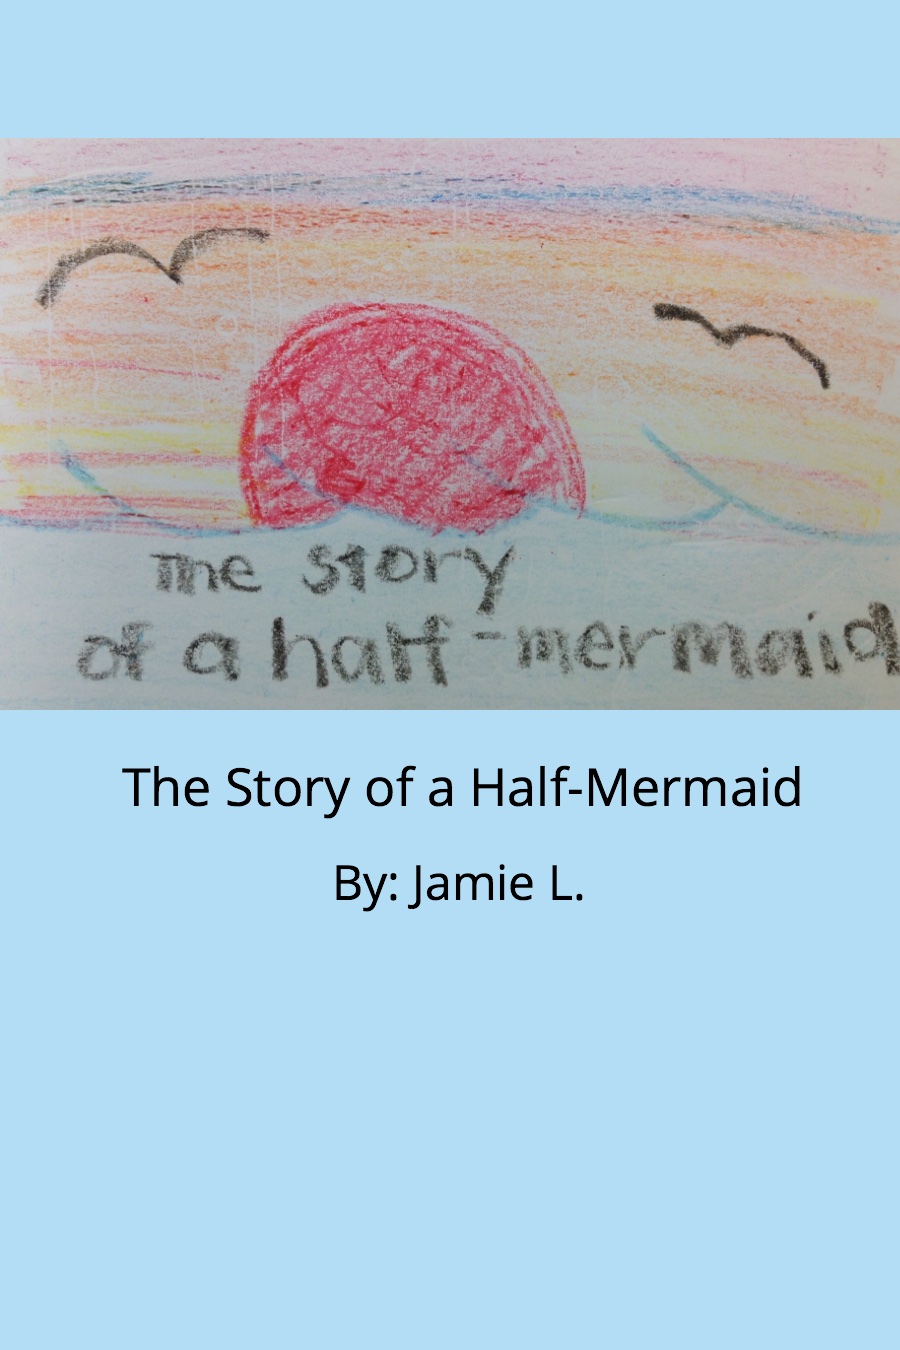 The Story of a Half Mermaid by Jamie L